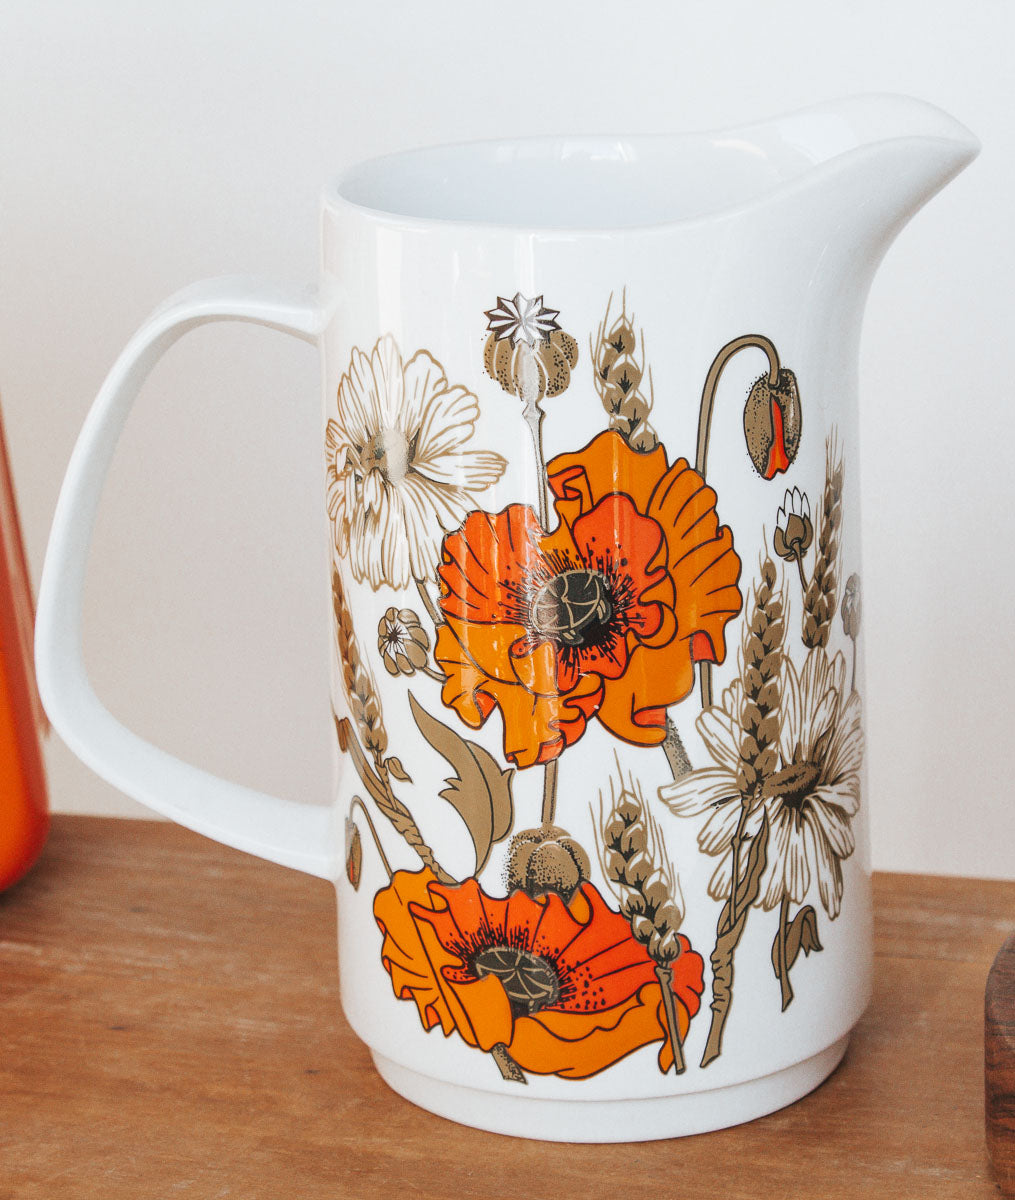 vintage boho bohemian retro water jug pitcher with orange flowers